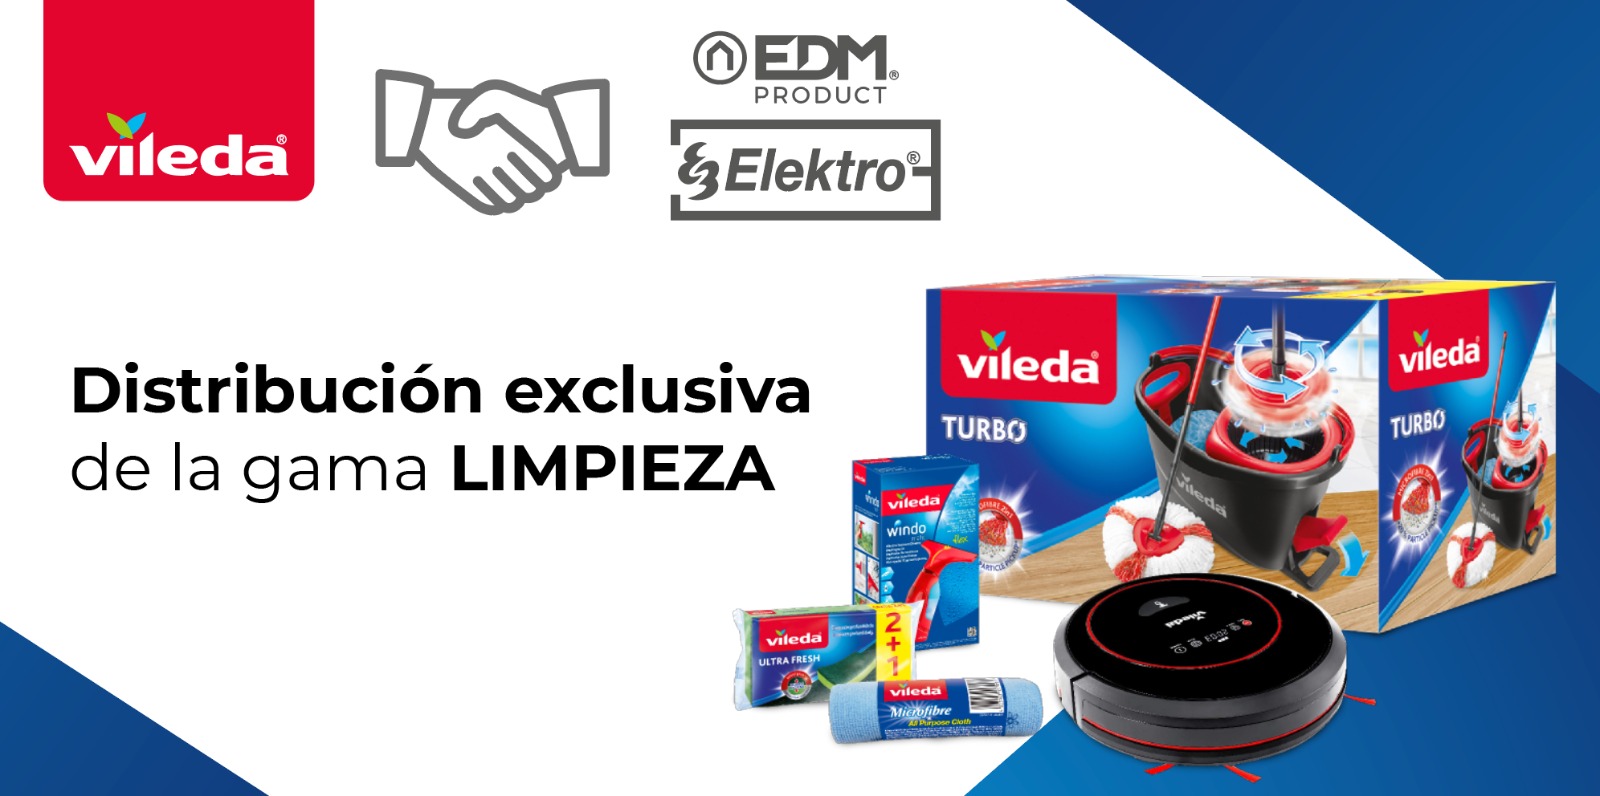 Elektro3-EDM unique distributor for Vileda, within the sectors of hardware and DIY